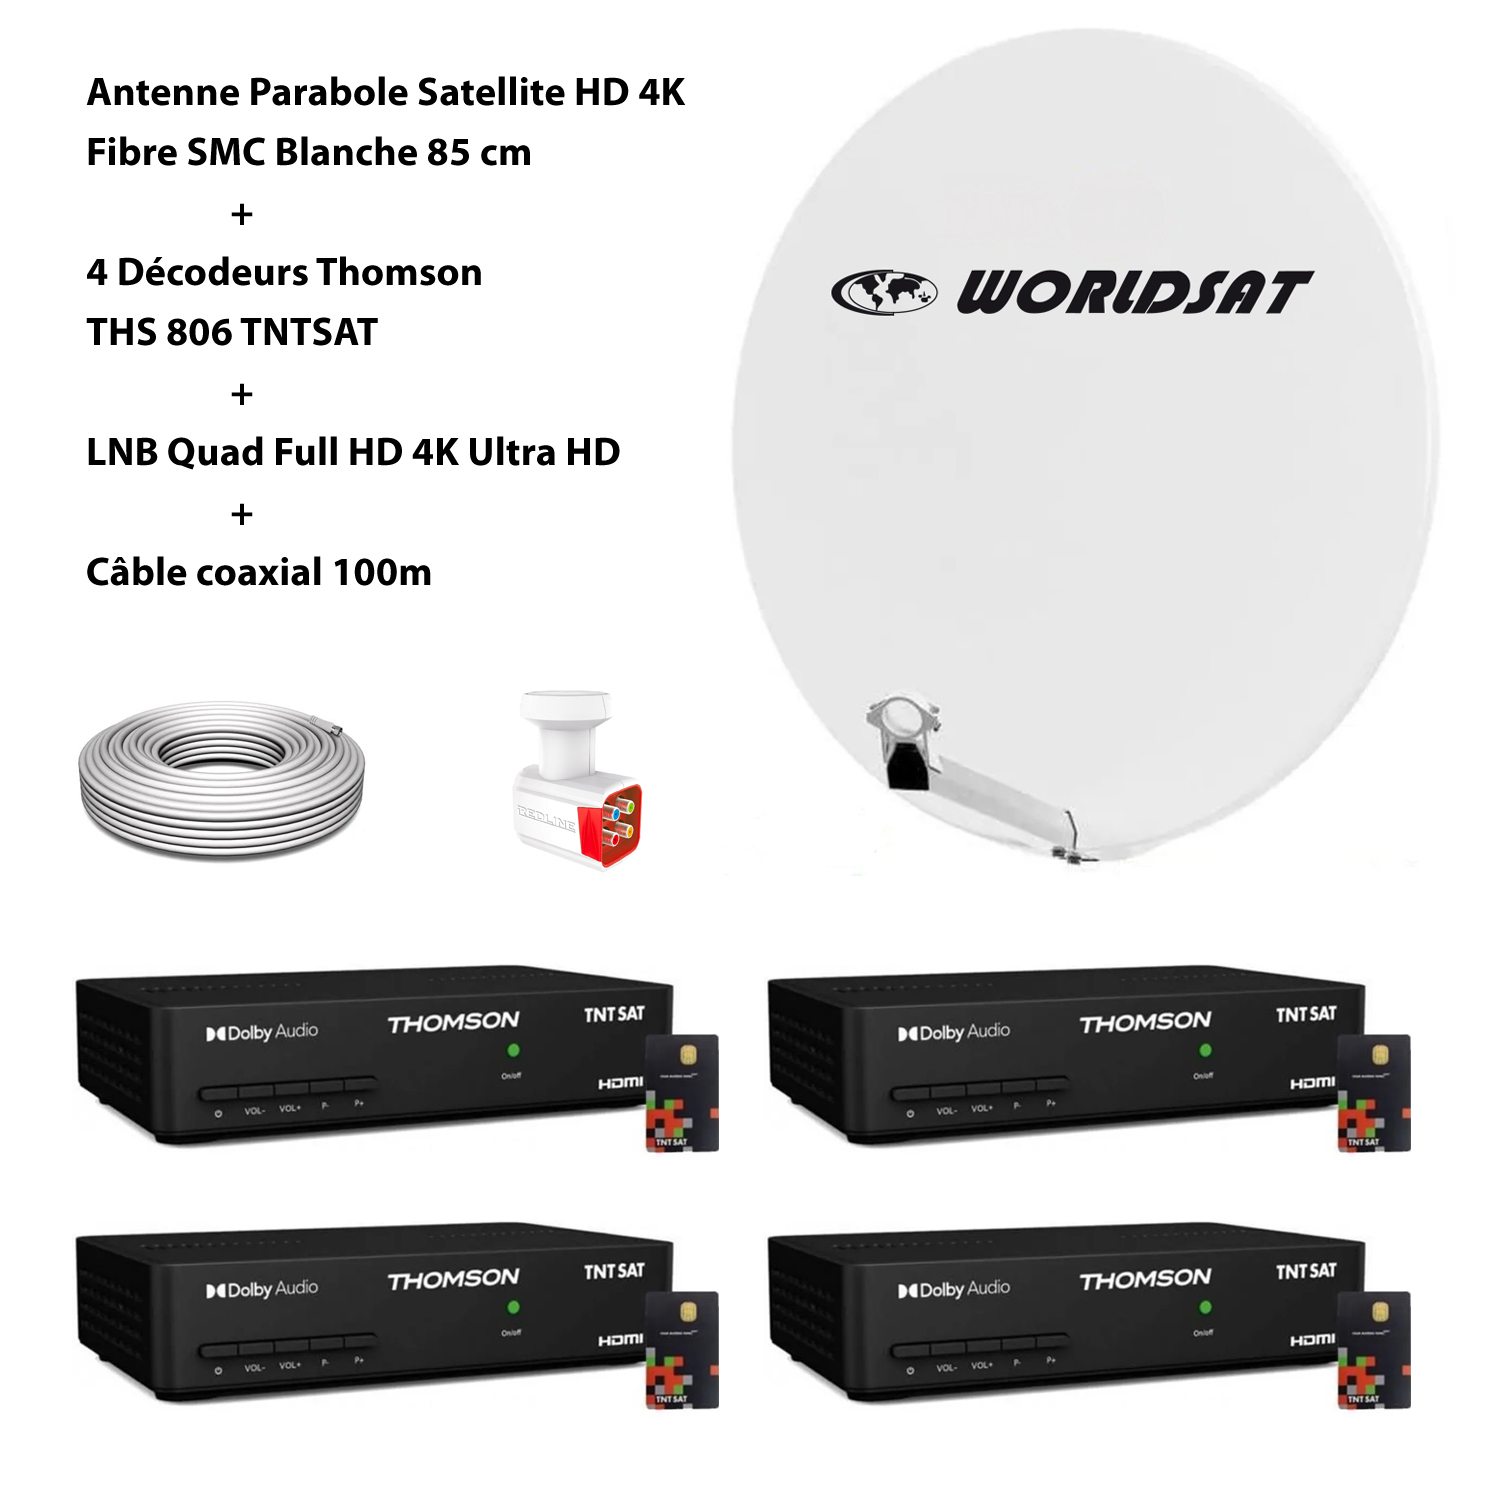 Antenne Parabole Satellite HD 4K Fibre SMC Blanche 85cm WORLDSAT